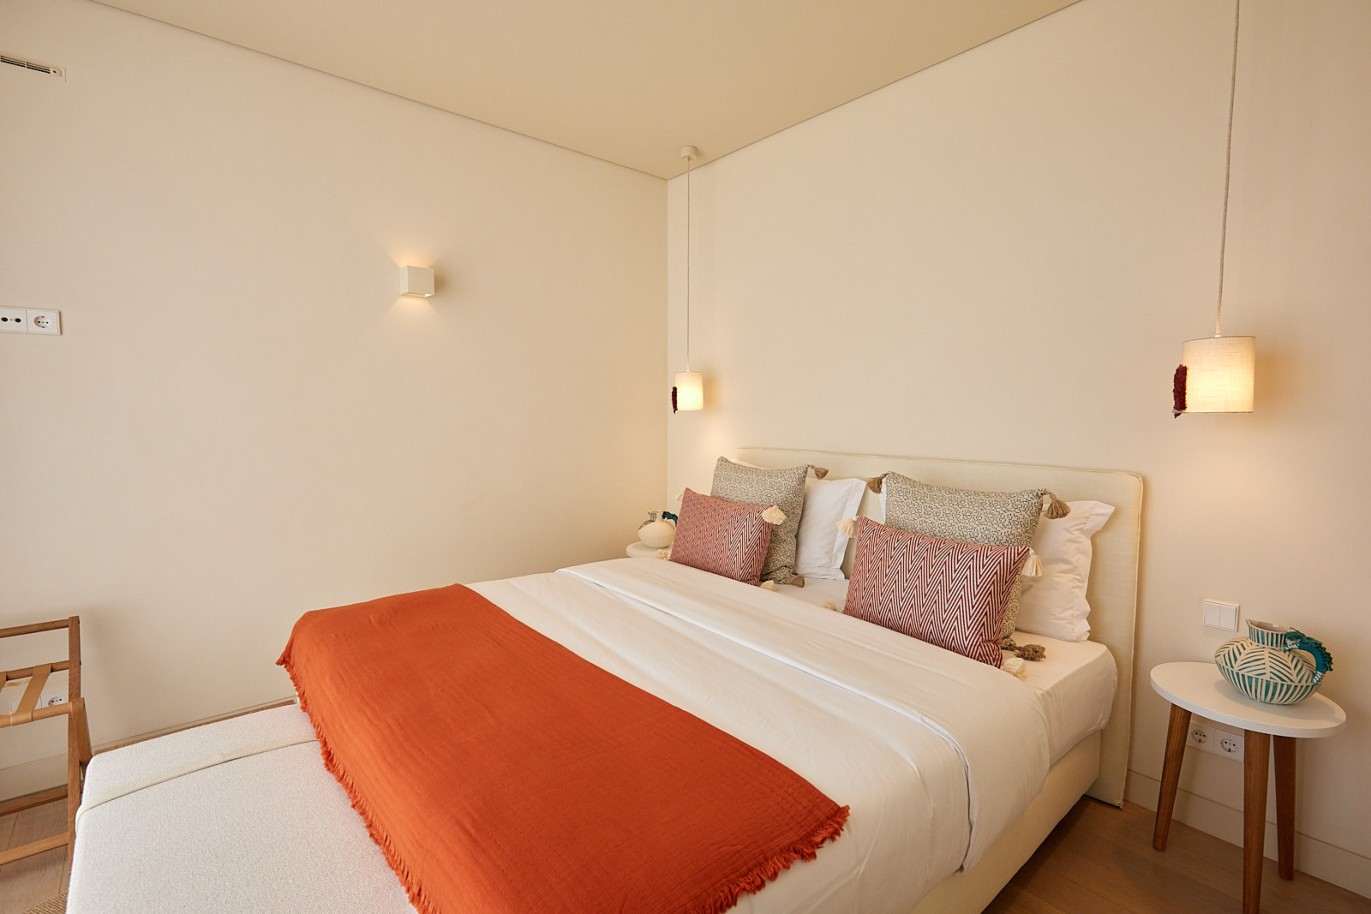 2 bedroom apartment in resort, for sale in Porches, Algarve_228831